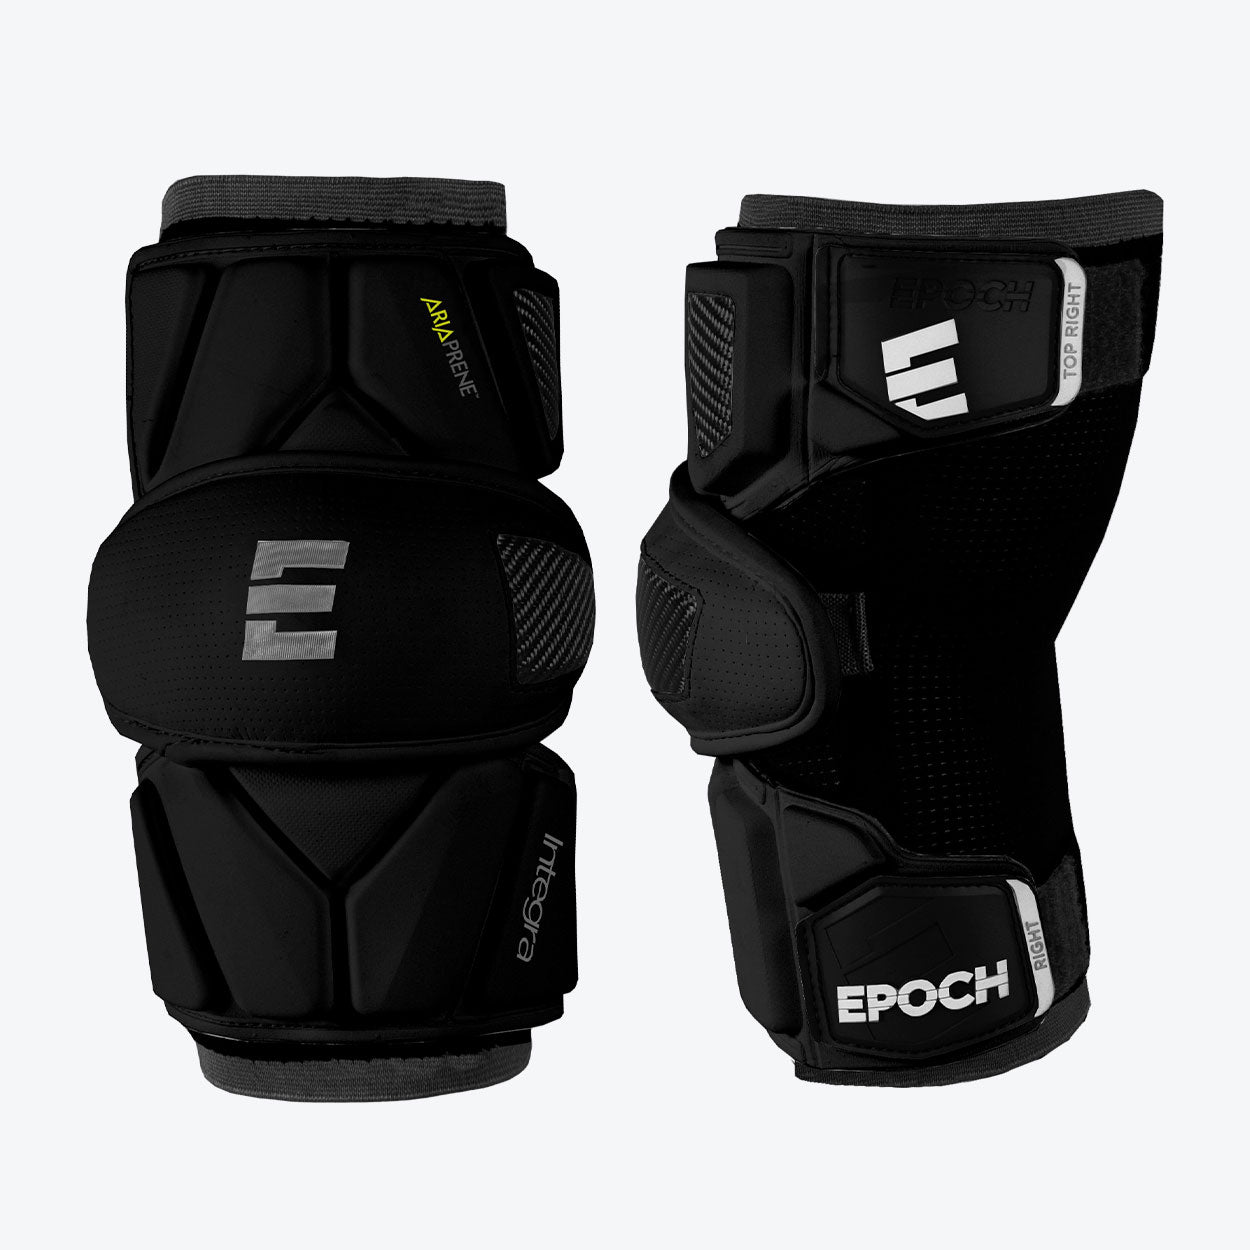 Epoch Integra Elite Arm Pad - Black